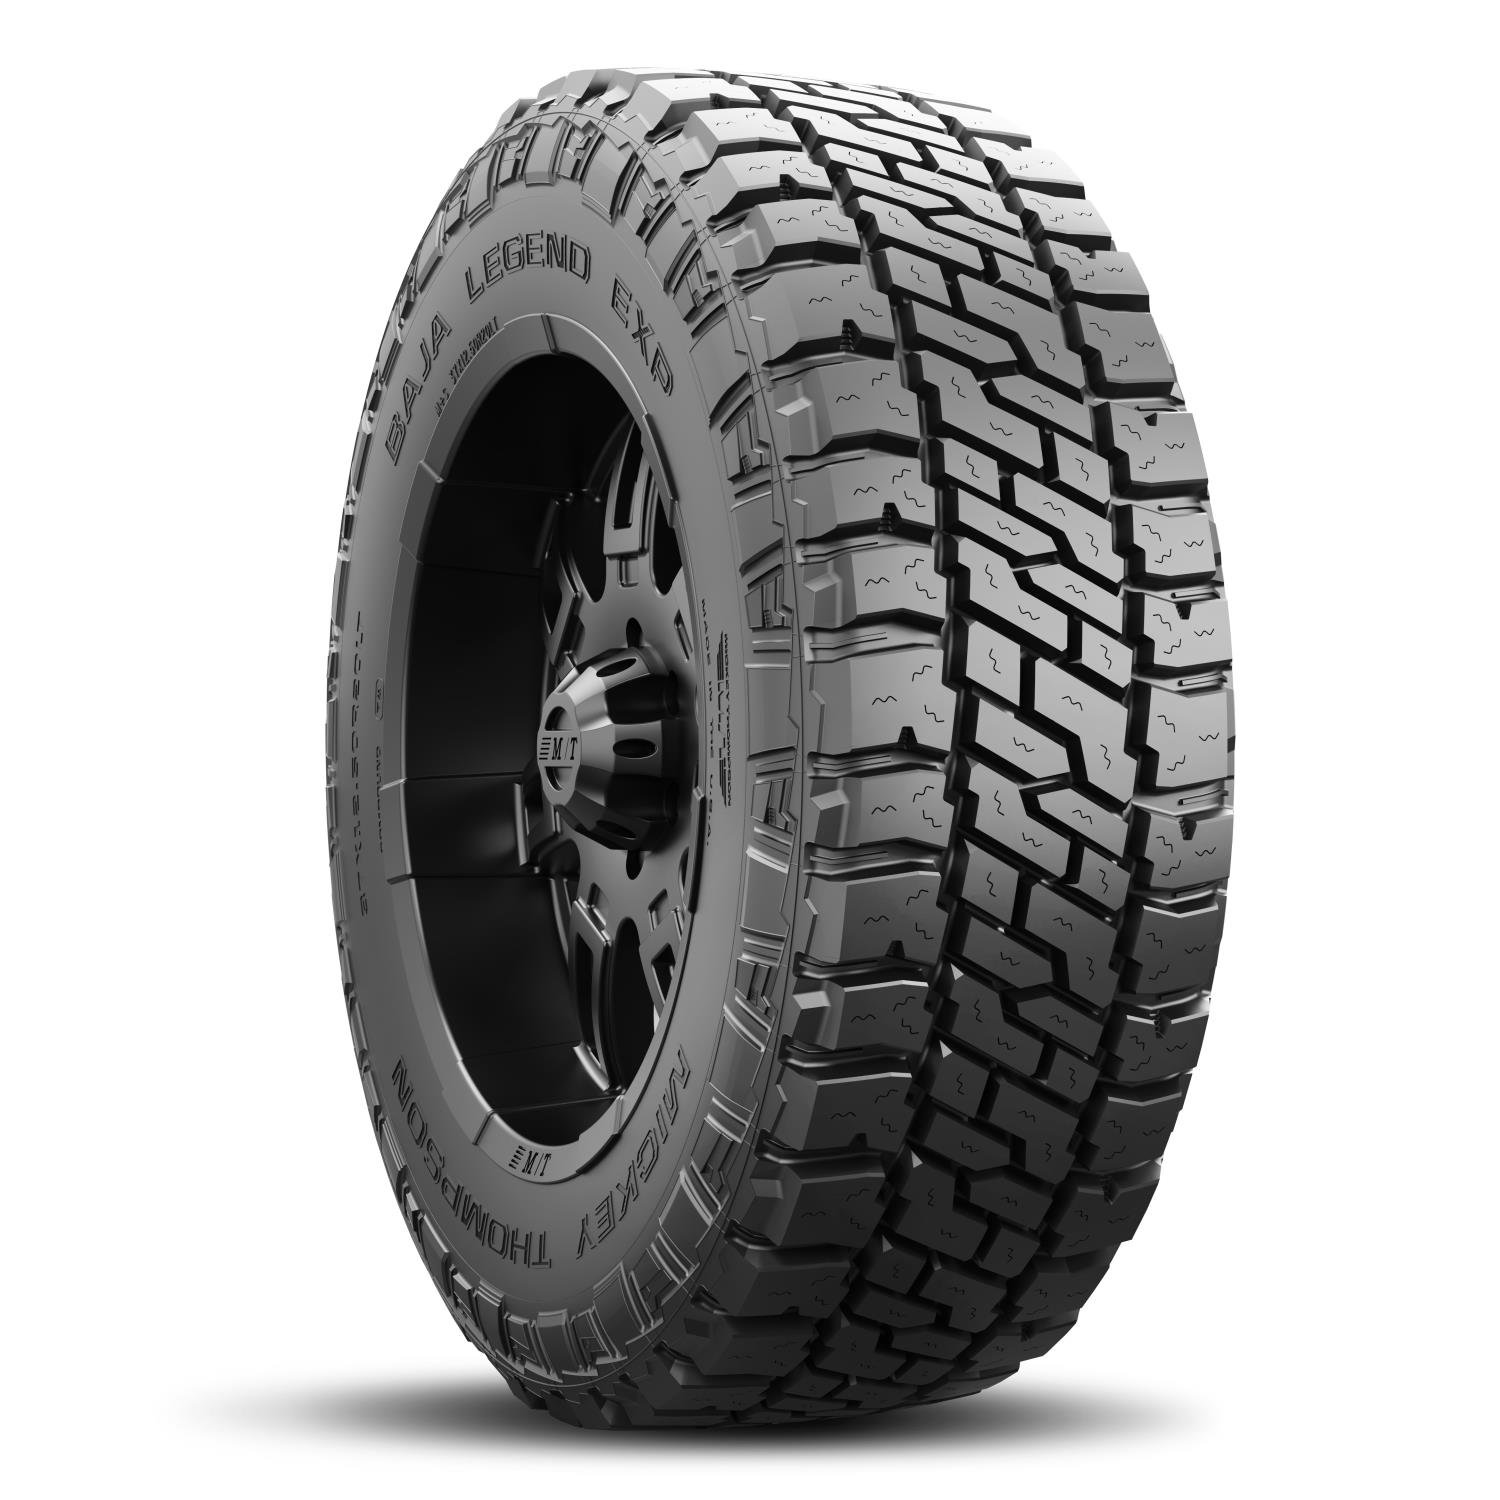 Baja Legend EXP Tire LT305/55R20